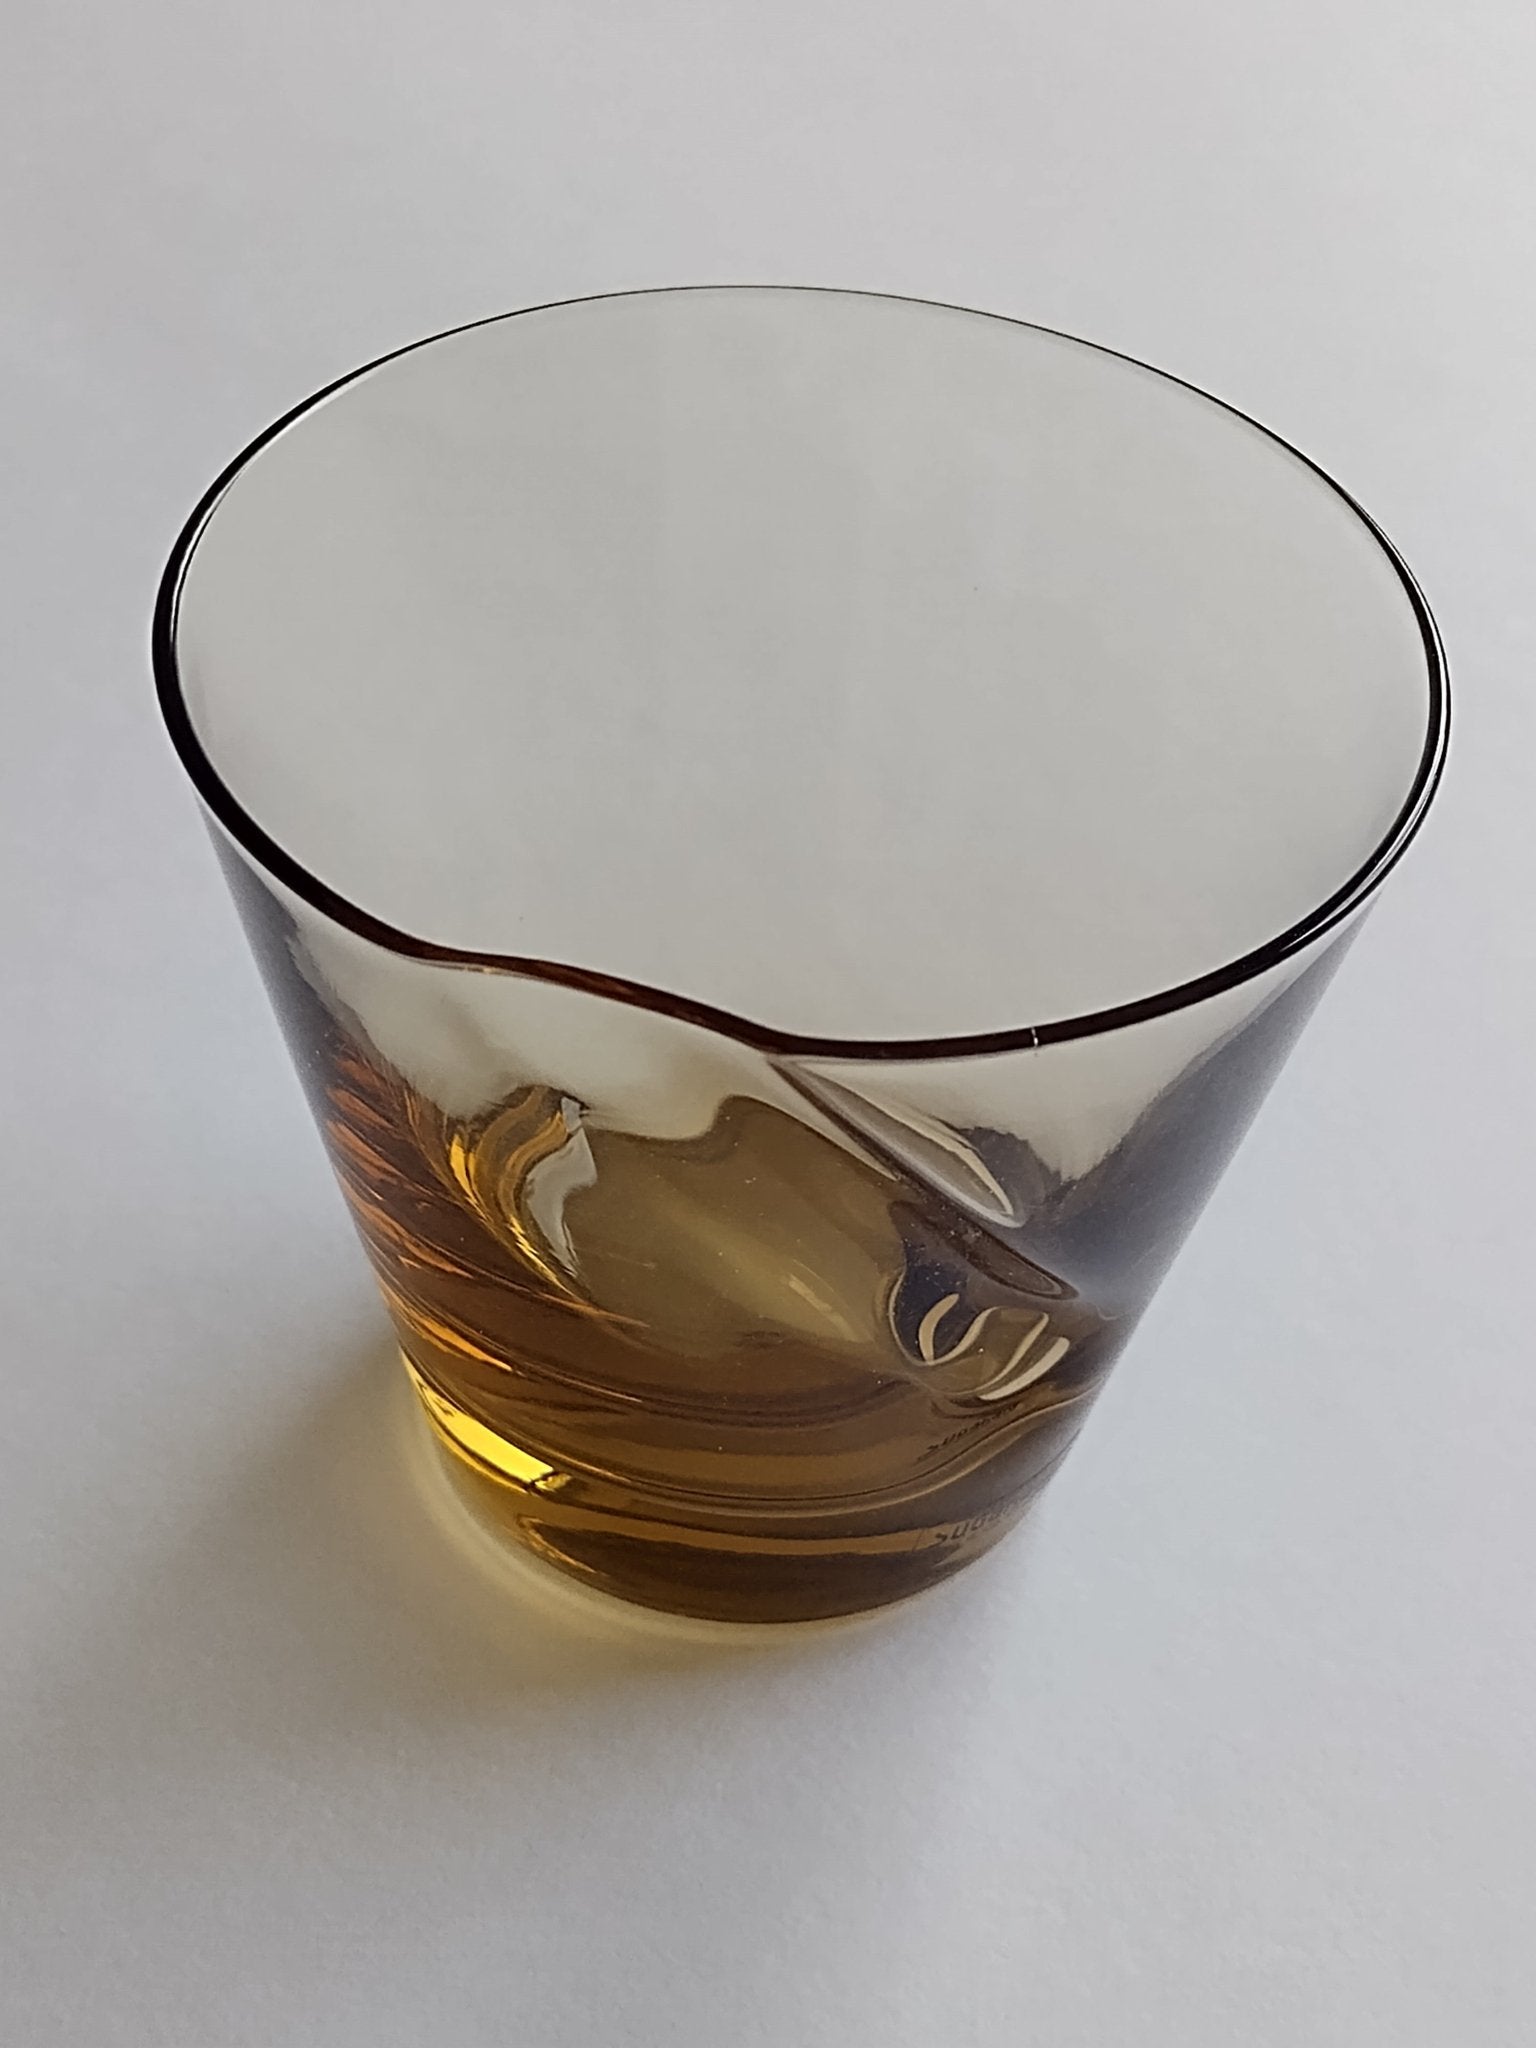 Sugahara-Peco universeel glas 250ml tan - Schreuder-kraan.shop